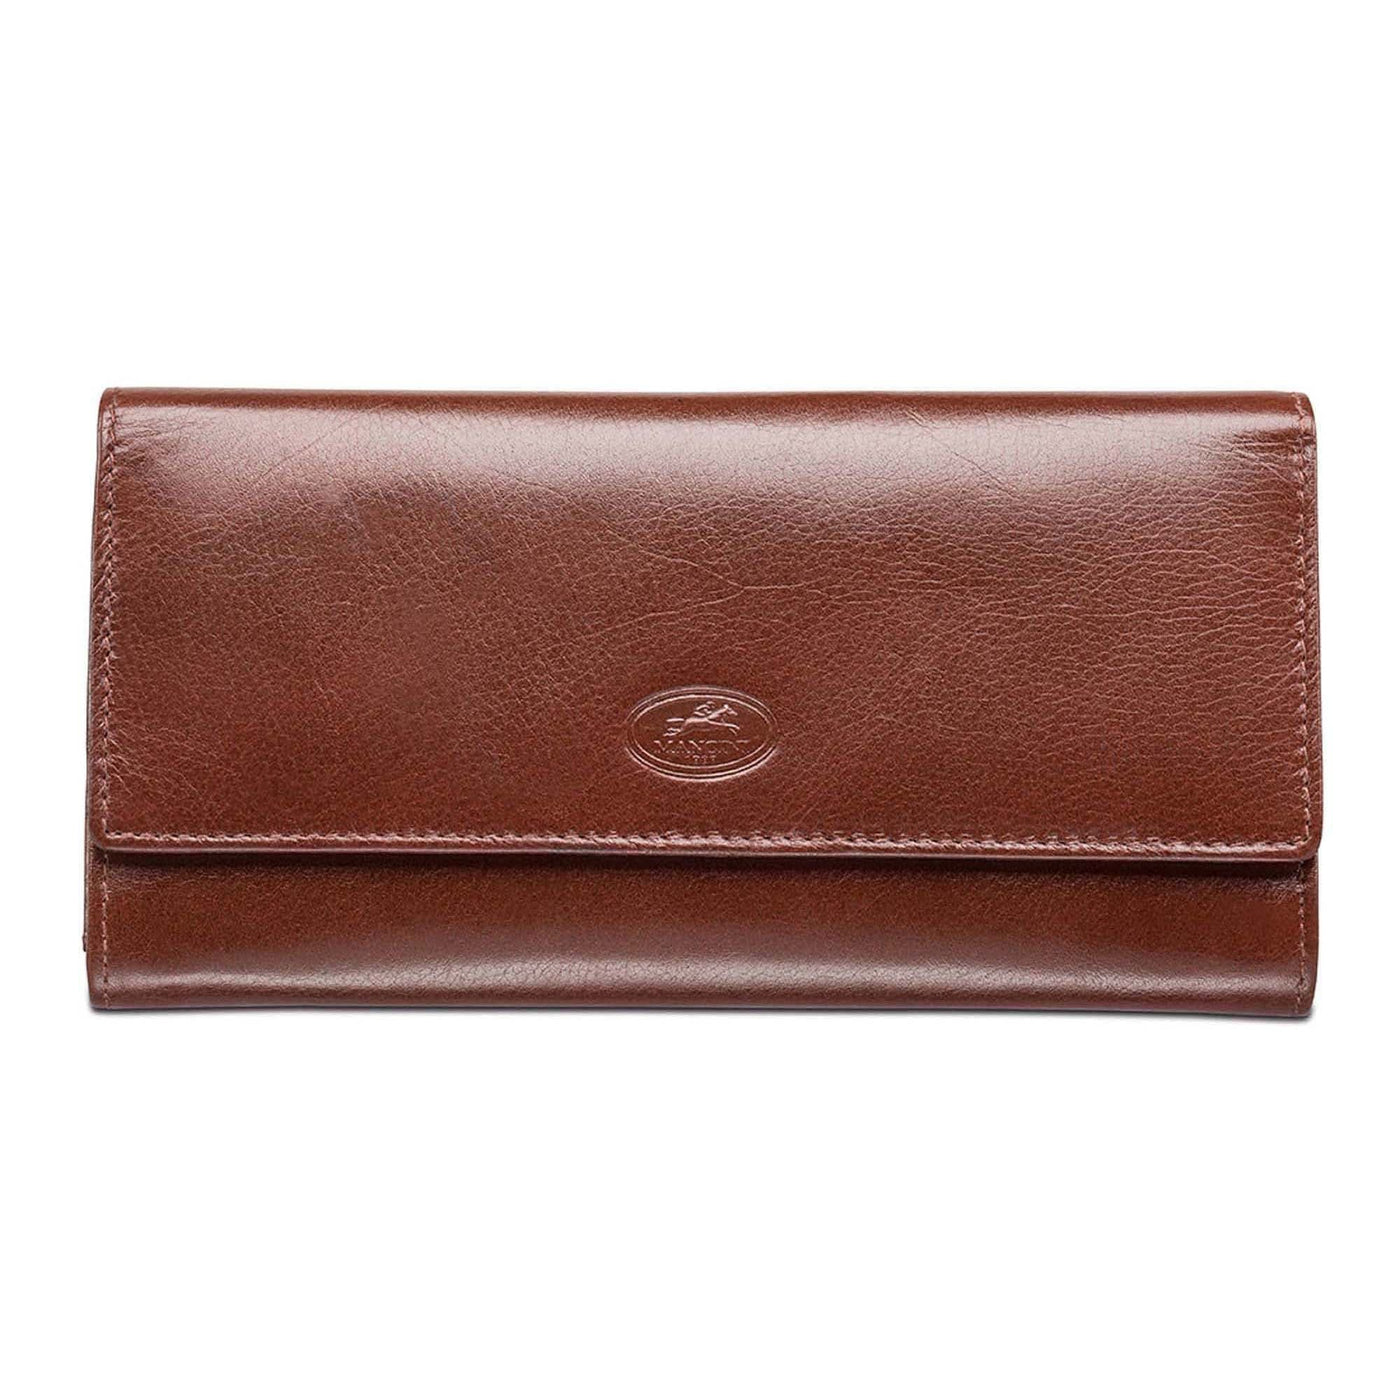 KANGAROO KINGDOM fashion split leather women wallets long hasp trifold purse  brand lady clutch card holder wallet - AliExpress